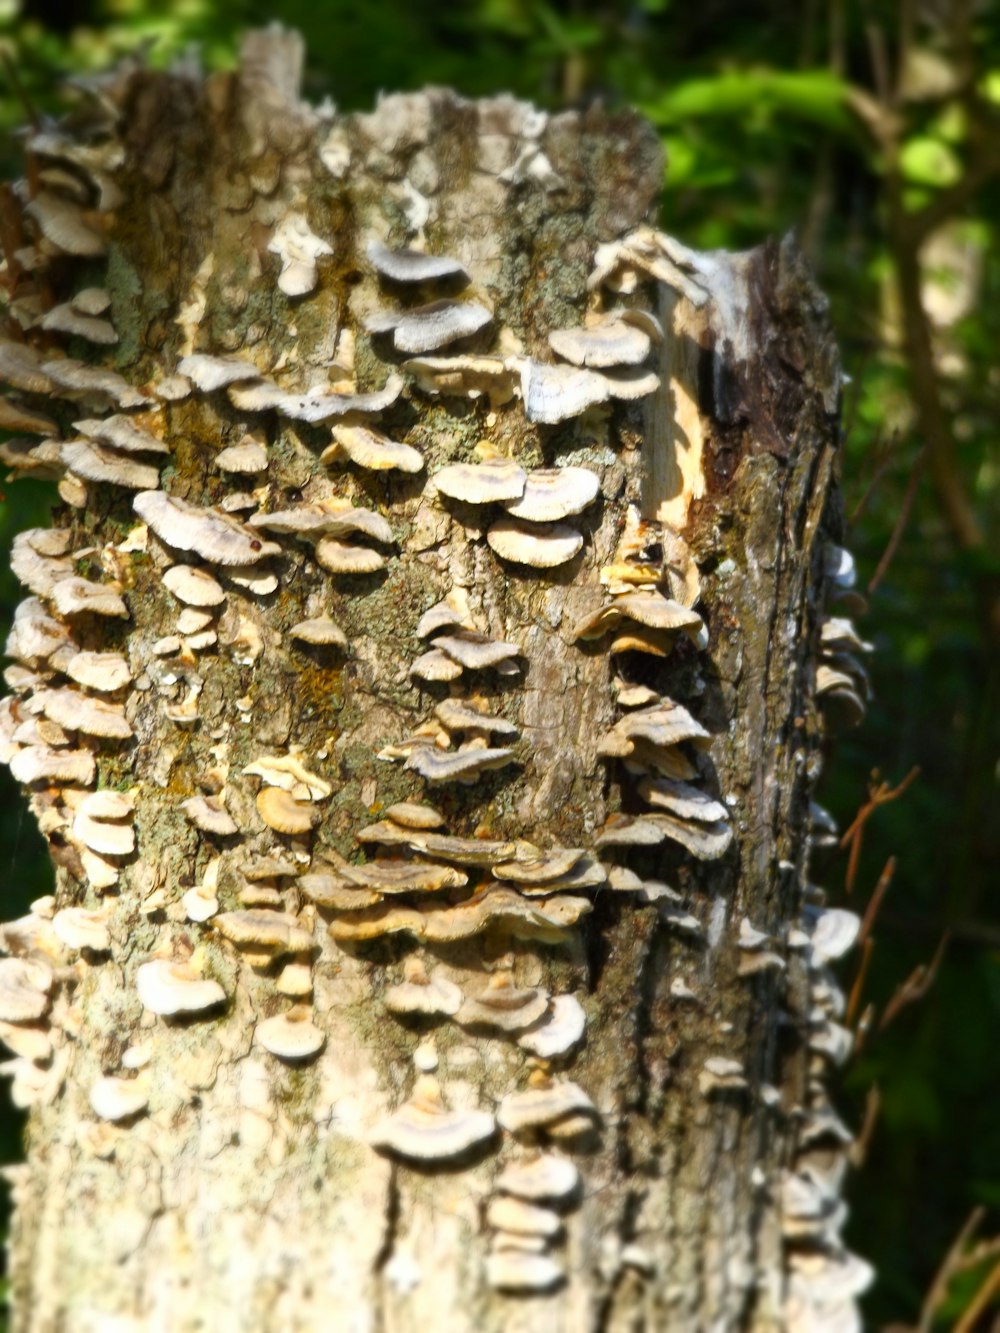 white fungi growing on tree trunk